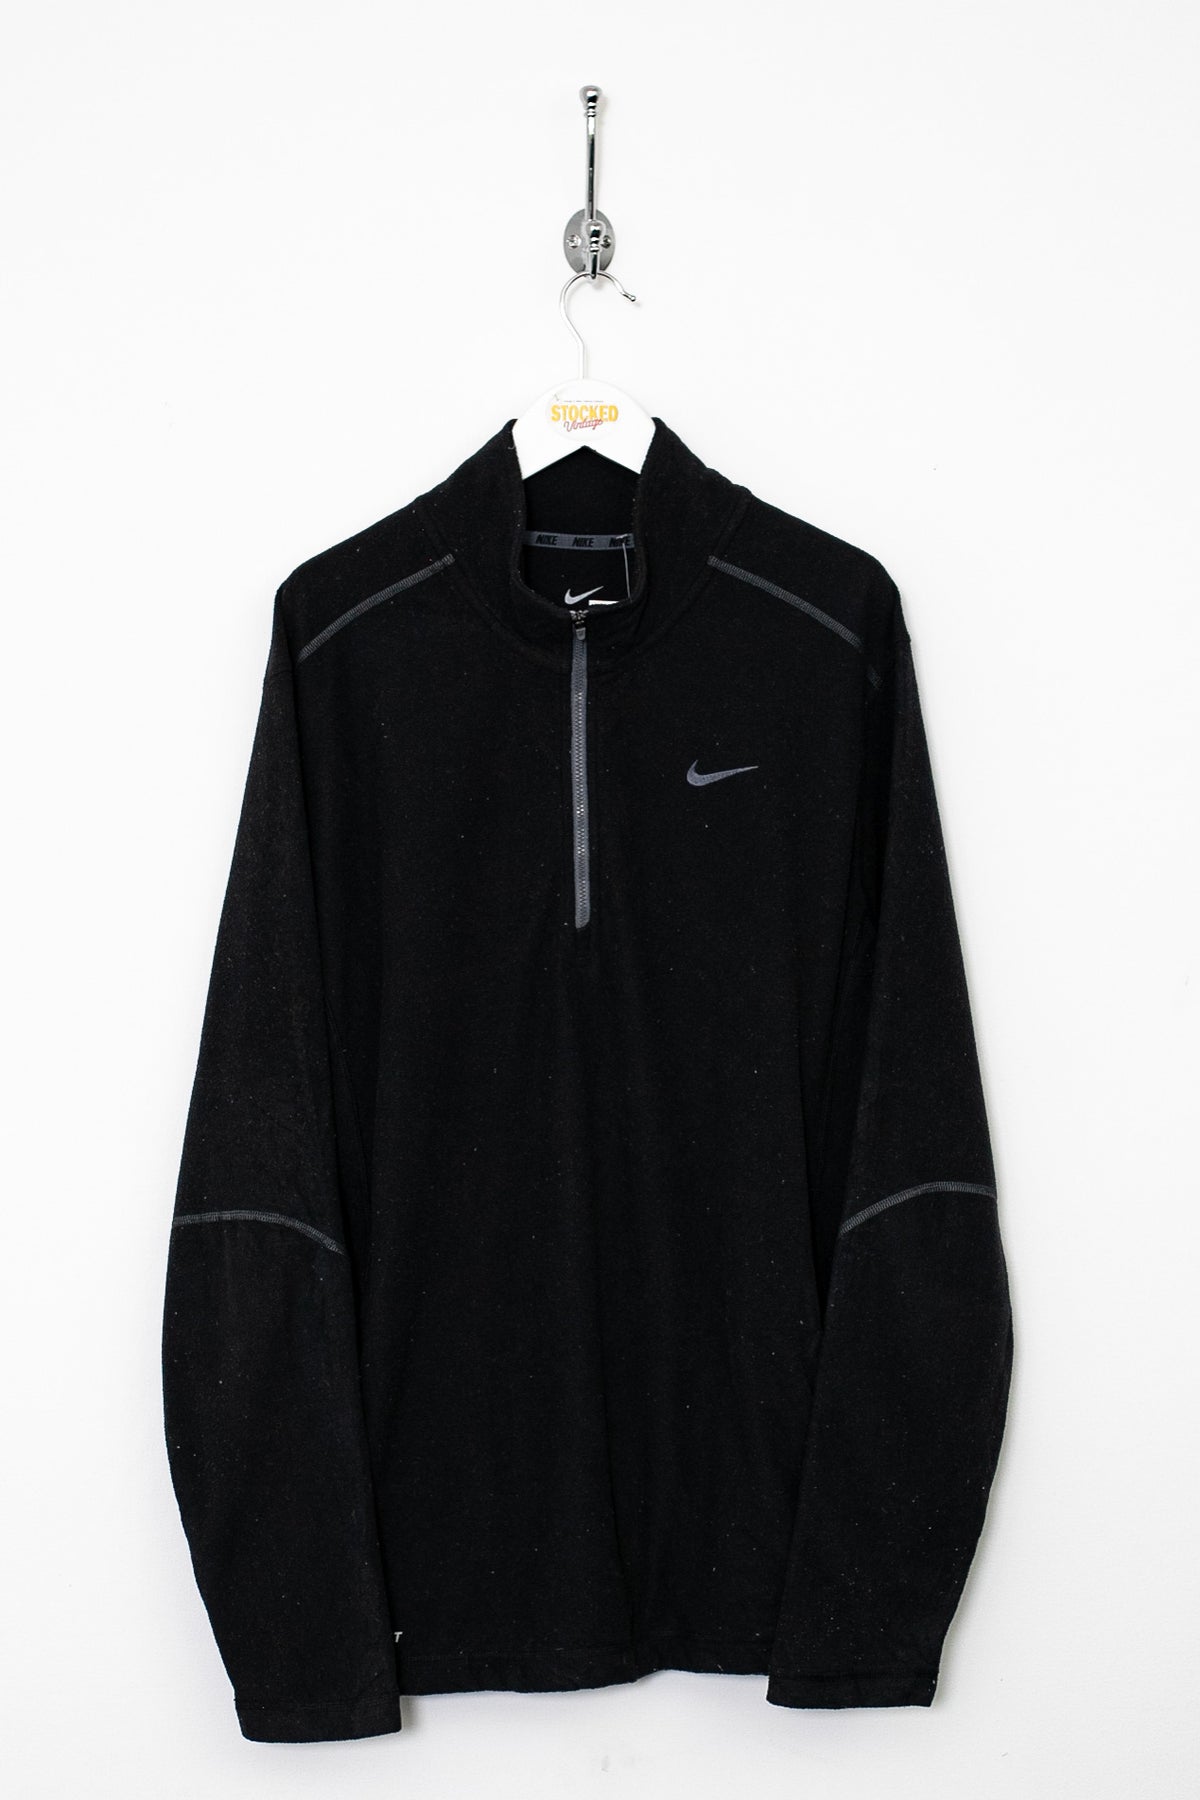 Nike 1/4 Zip Sweatshirt (L)